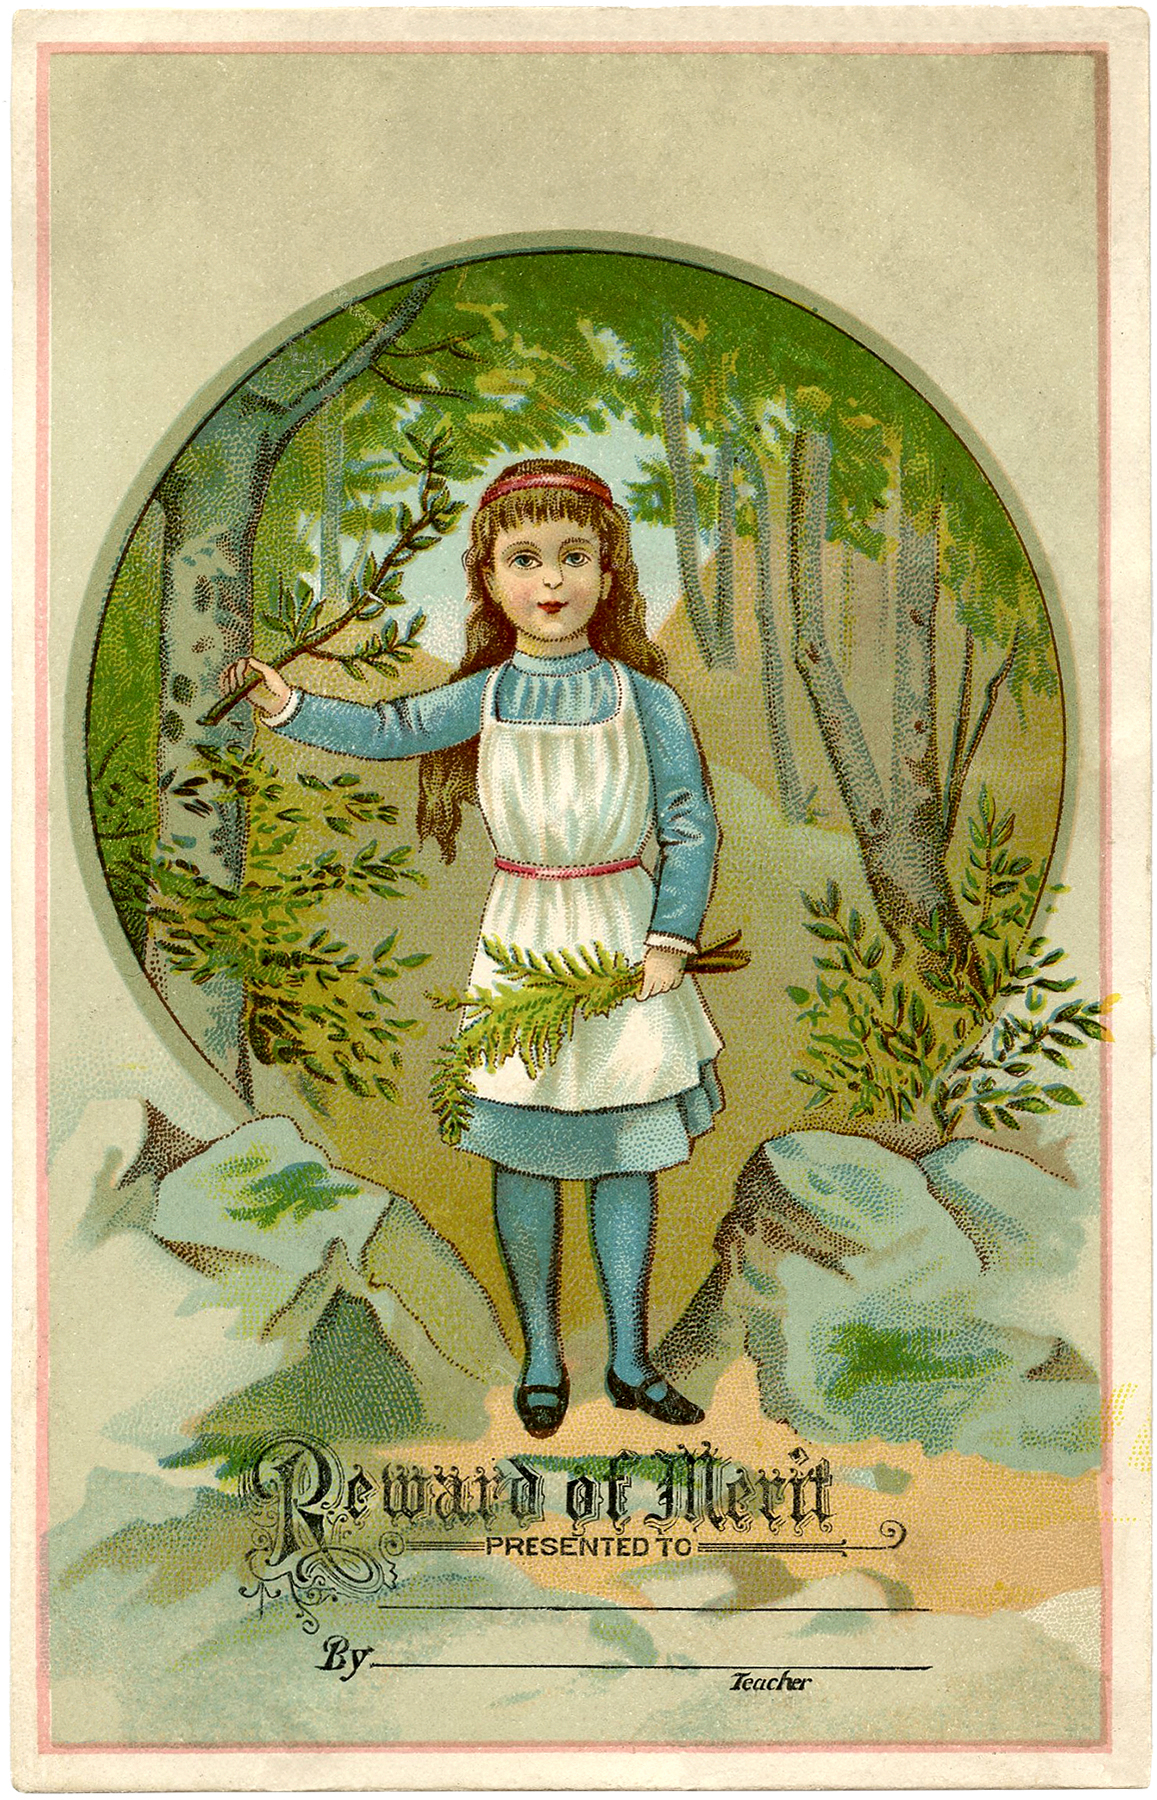 Vintage Reward of Merit Girl - Cute! - The Graphics Fairy1157 x 1800